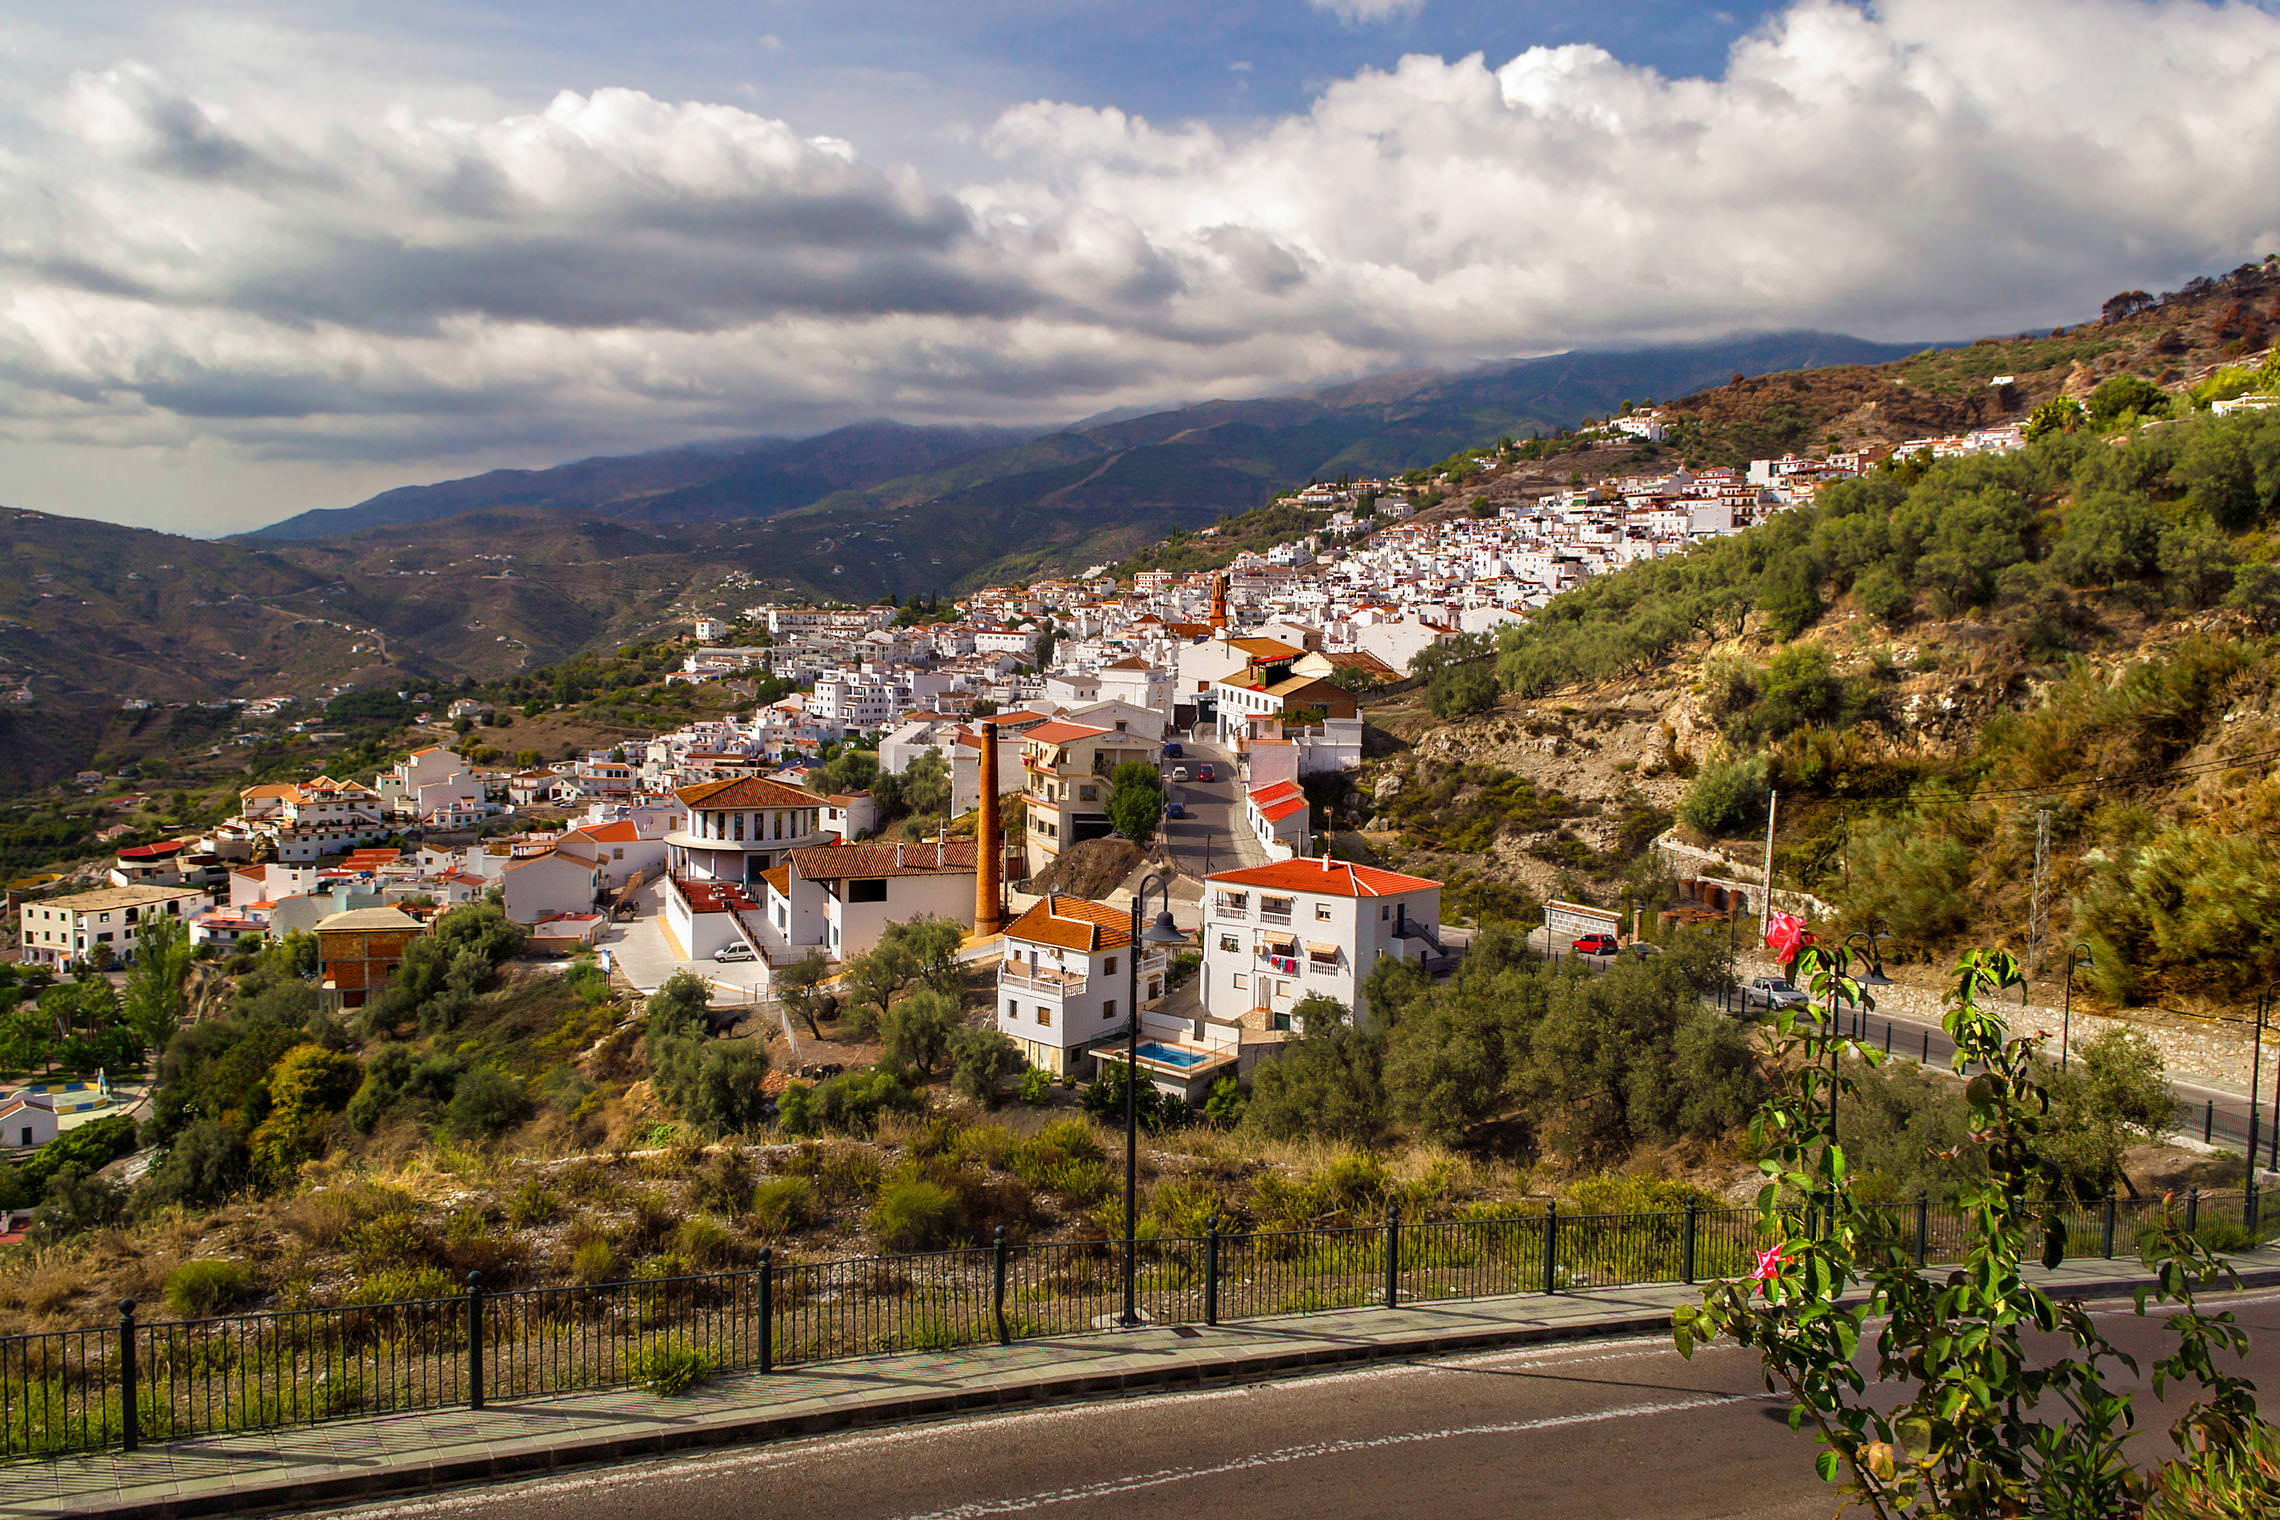 White village. Белые деревни Андалусии. Деревня в Андалусии. Испания Андалусия белые деревни. Белые деревушки Андалусии.